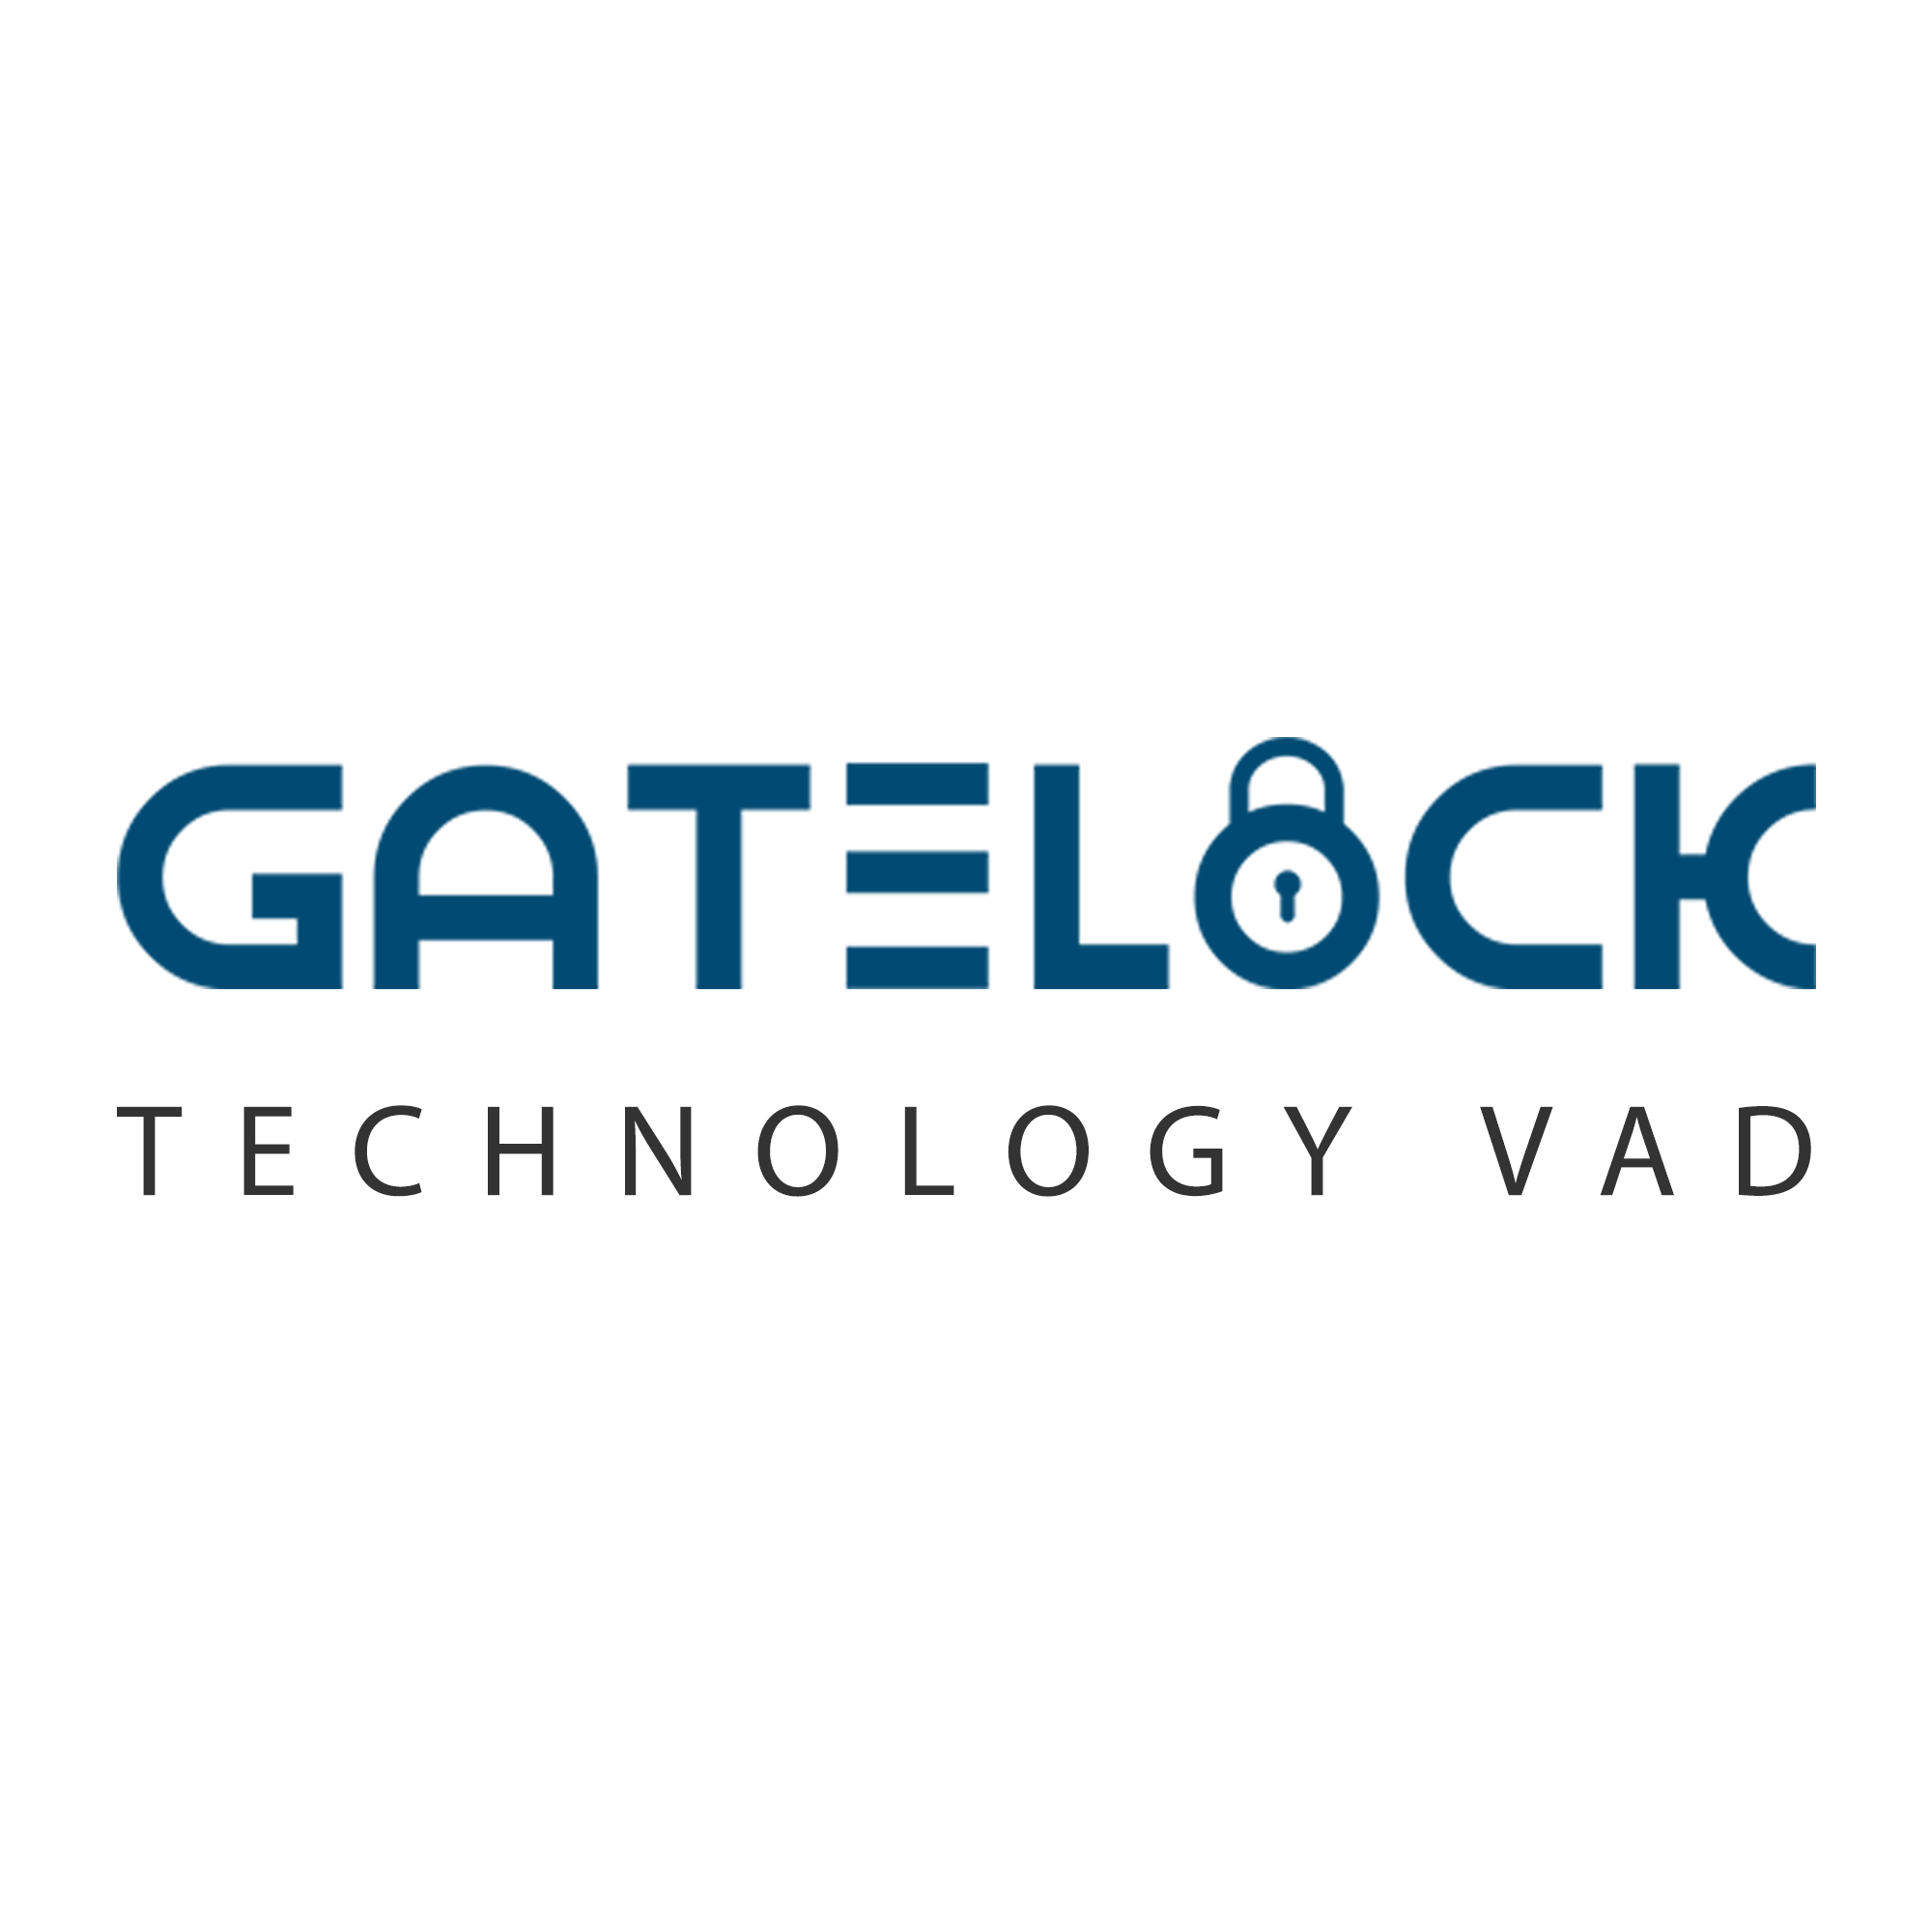 Gatelock